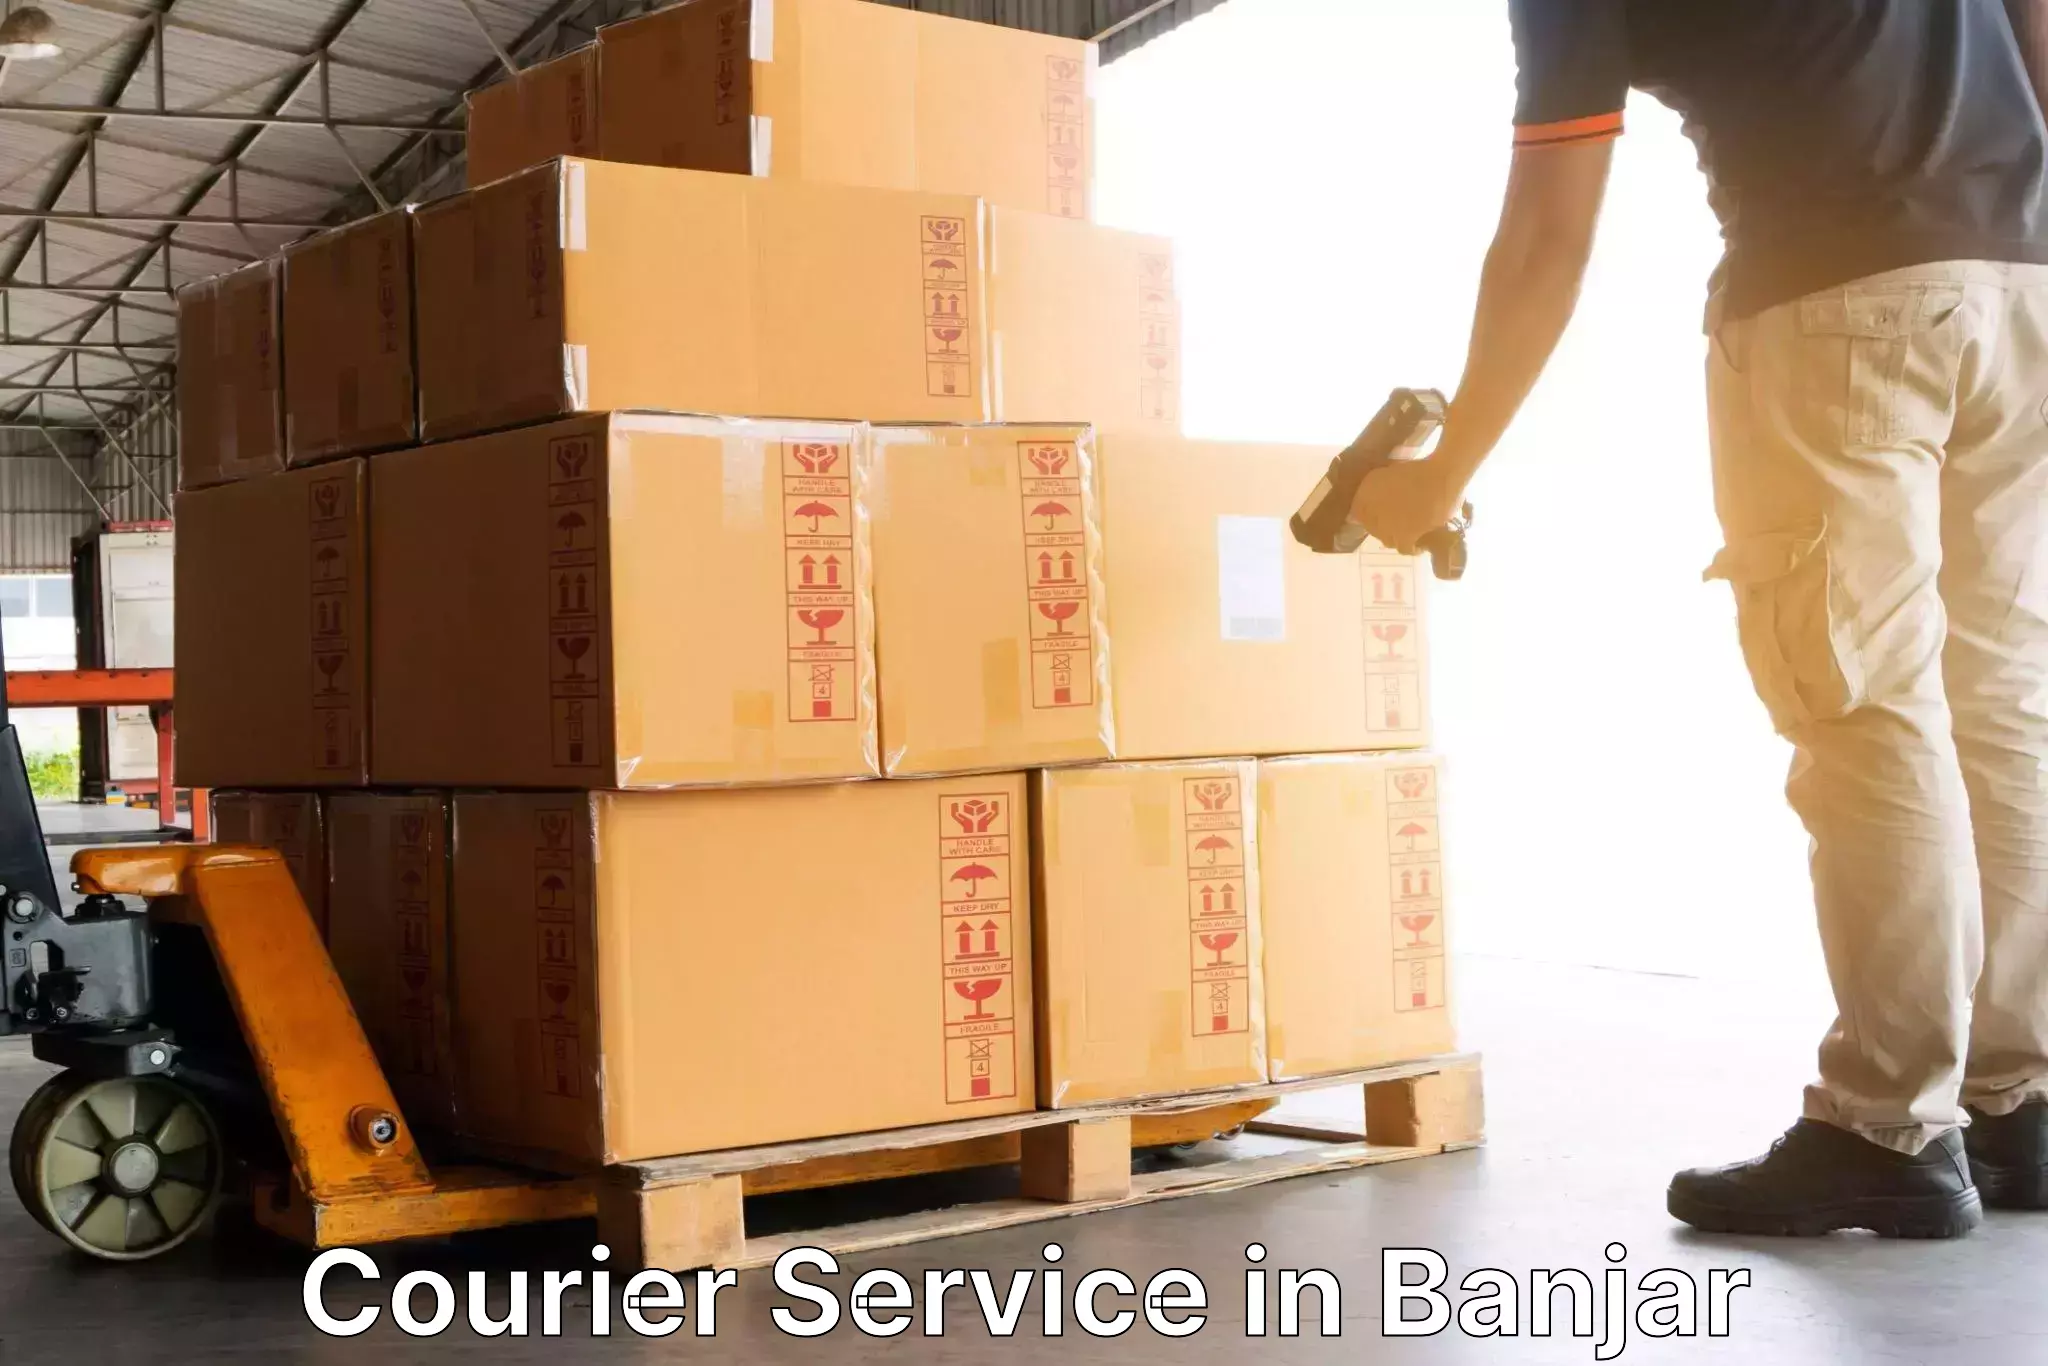 Efficient parcel delivery in Banjar